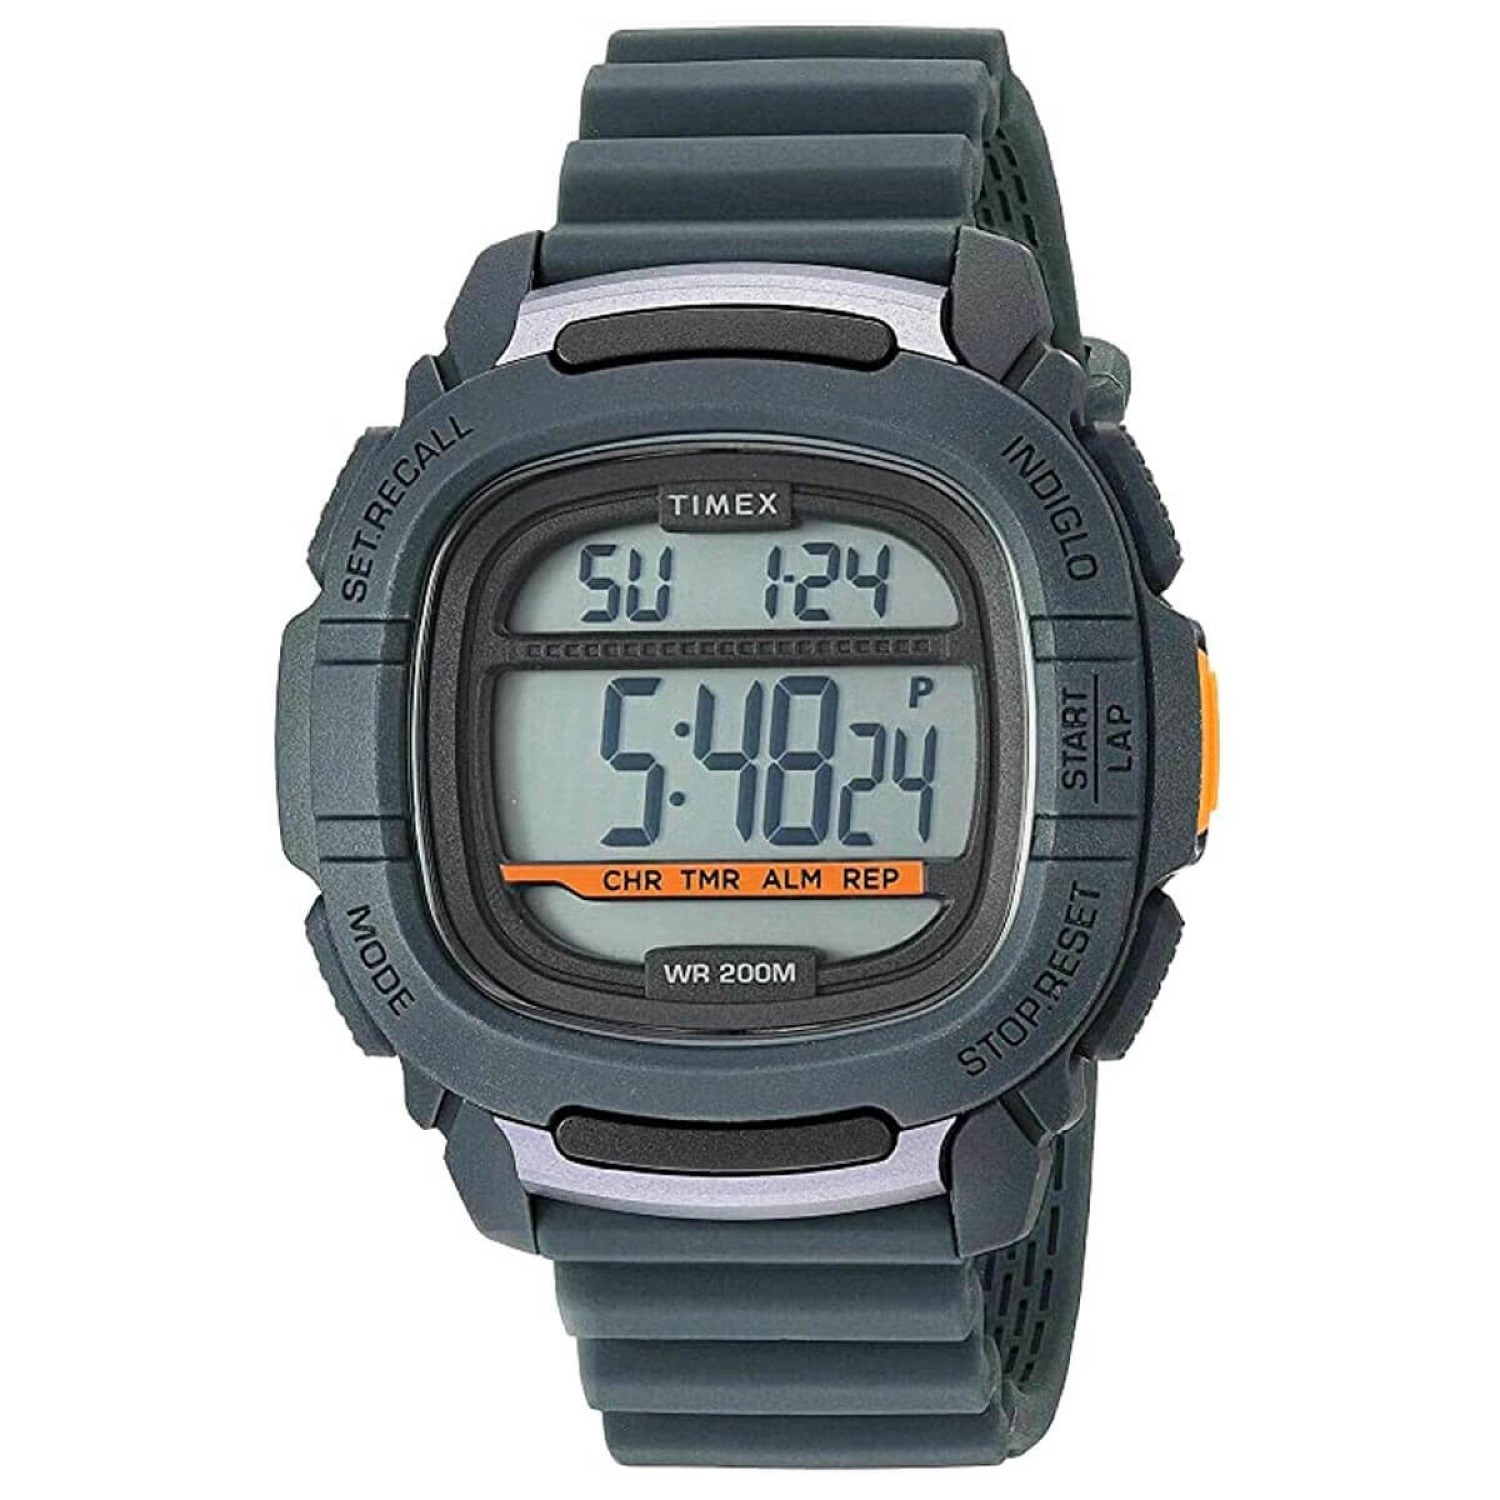 Timex Men's Command Grey Digital Watch $29.90 + Free Shipping